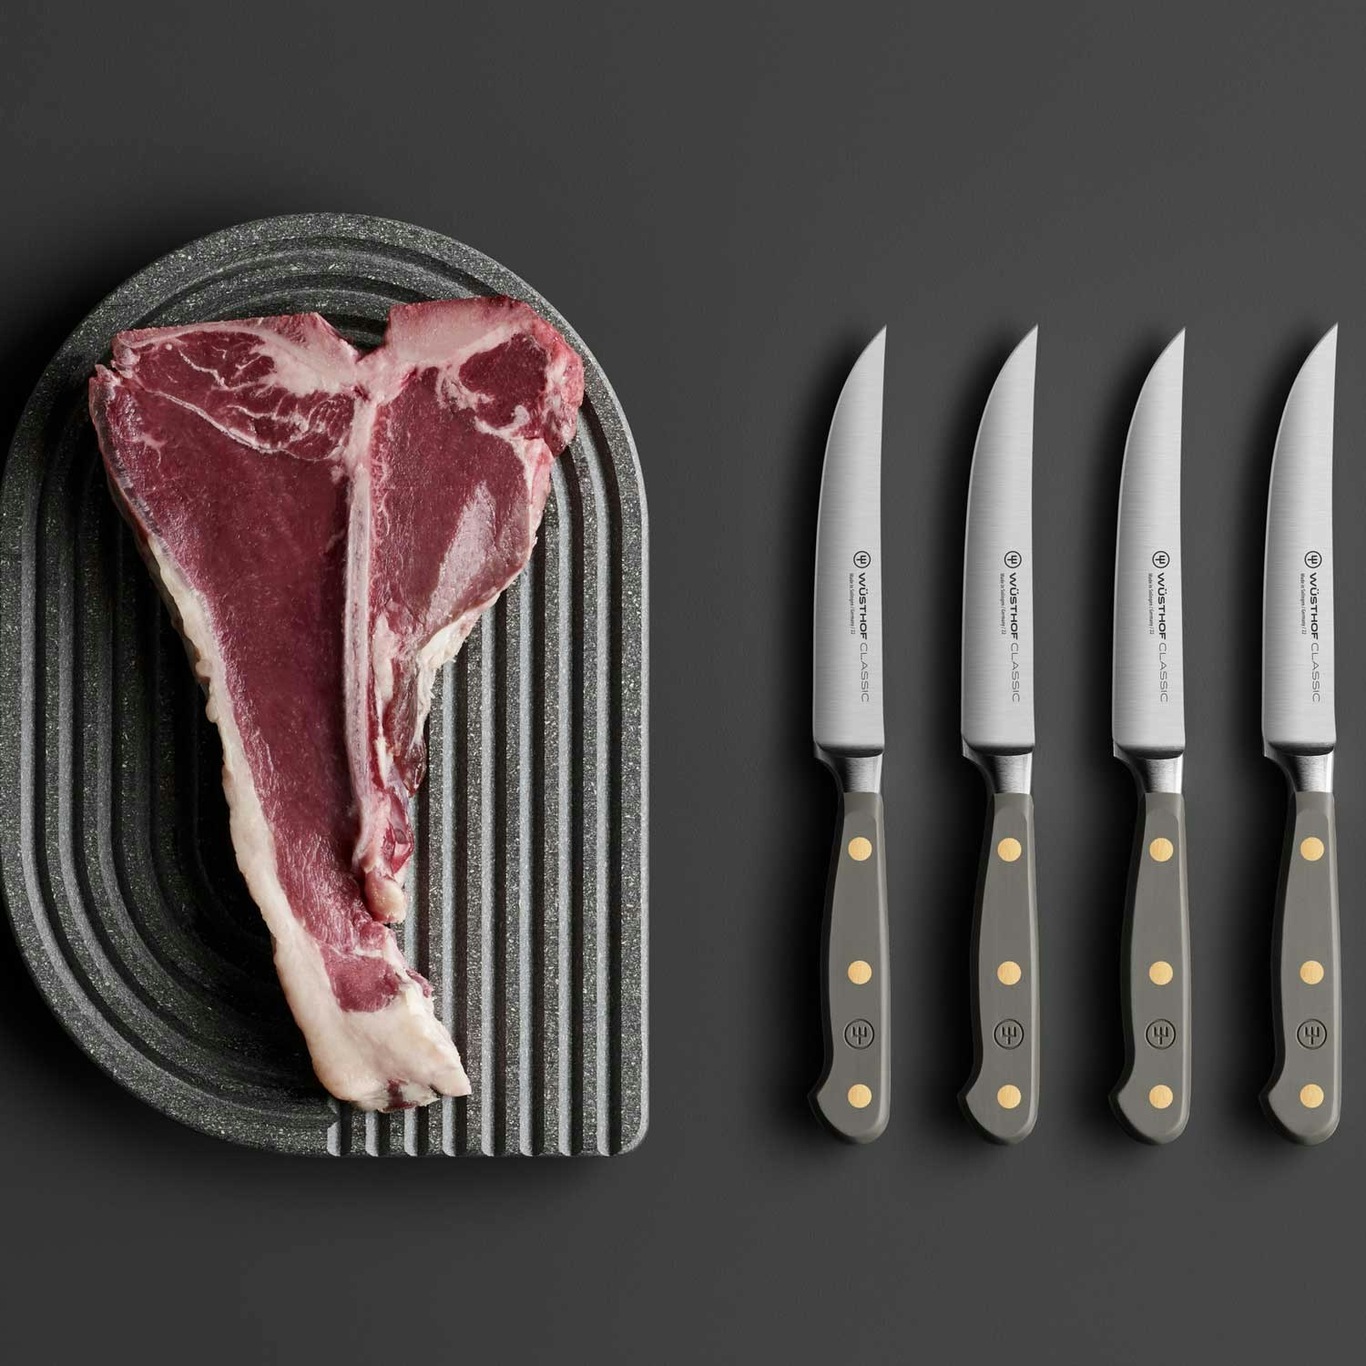 https://royaldesign.com/image/2/wusthof-classic-colour-steak-knives-4-pack-21?w=800&quality=80